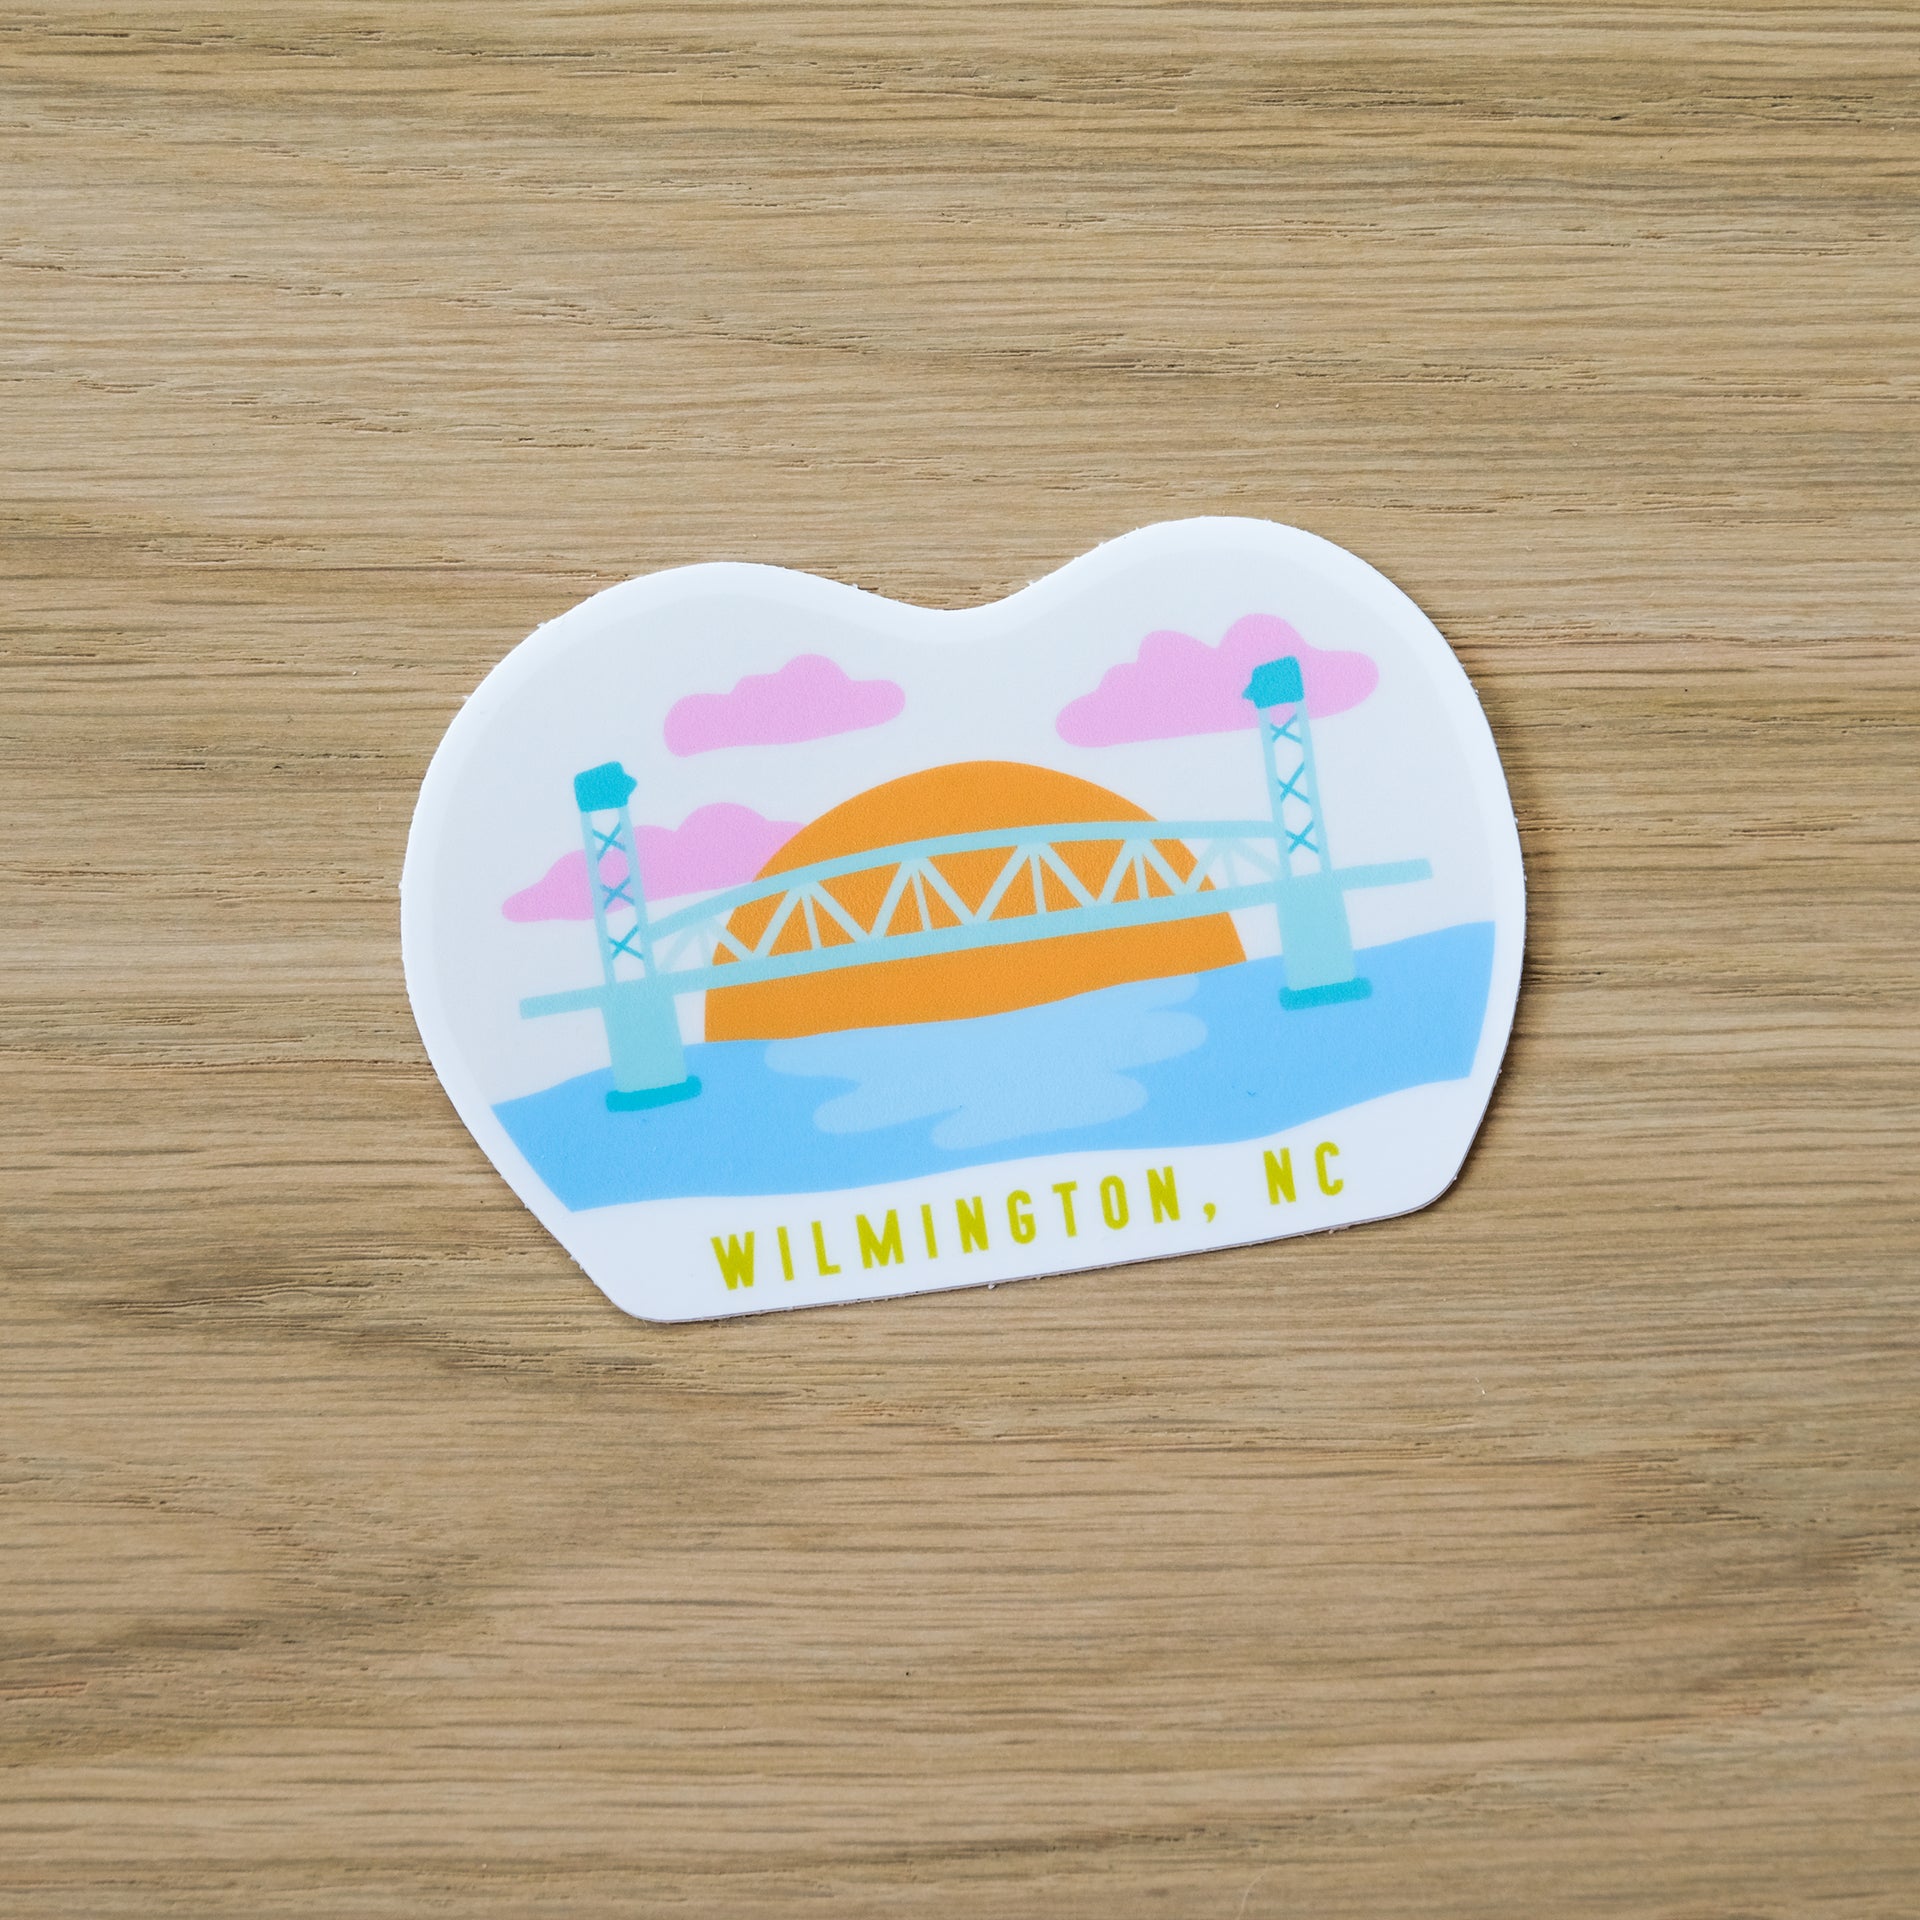 Downtown Wilmington NC Bridge Sticker